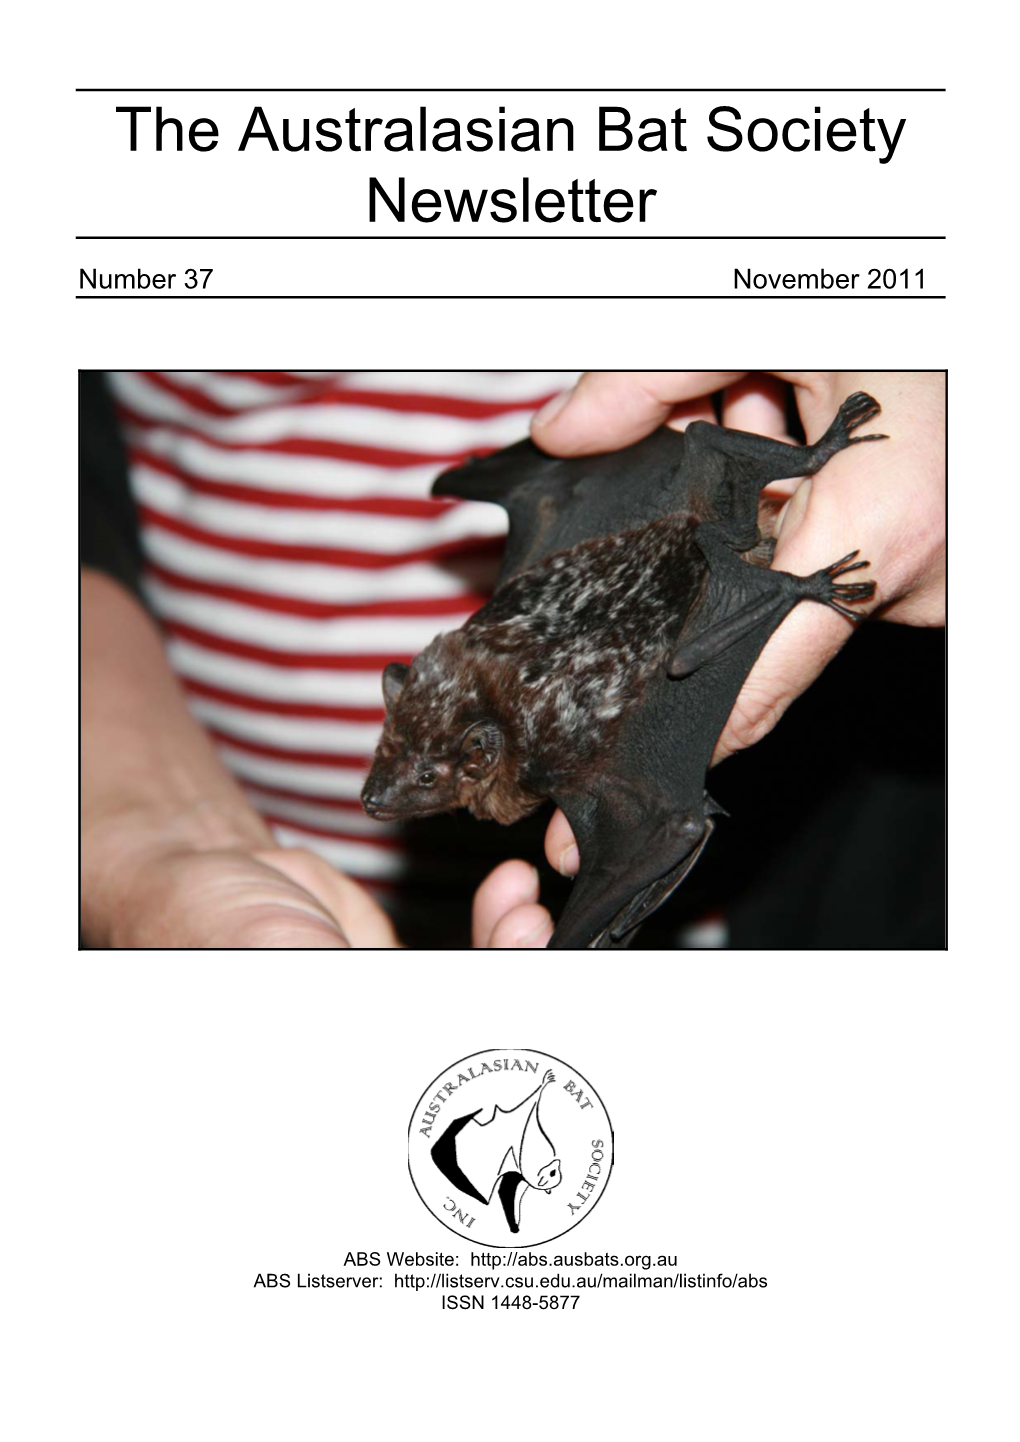 Australasian Bat Conservation Fund